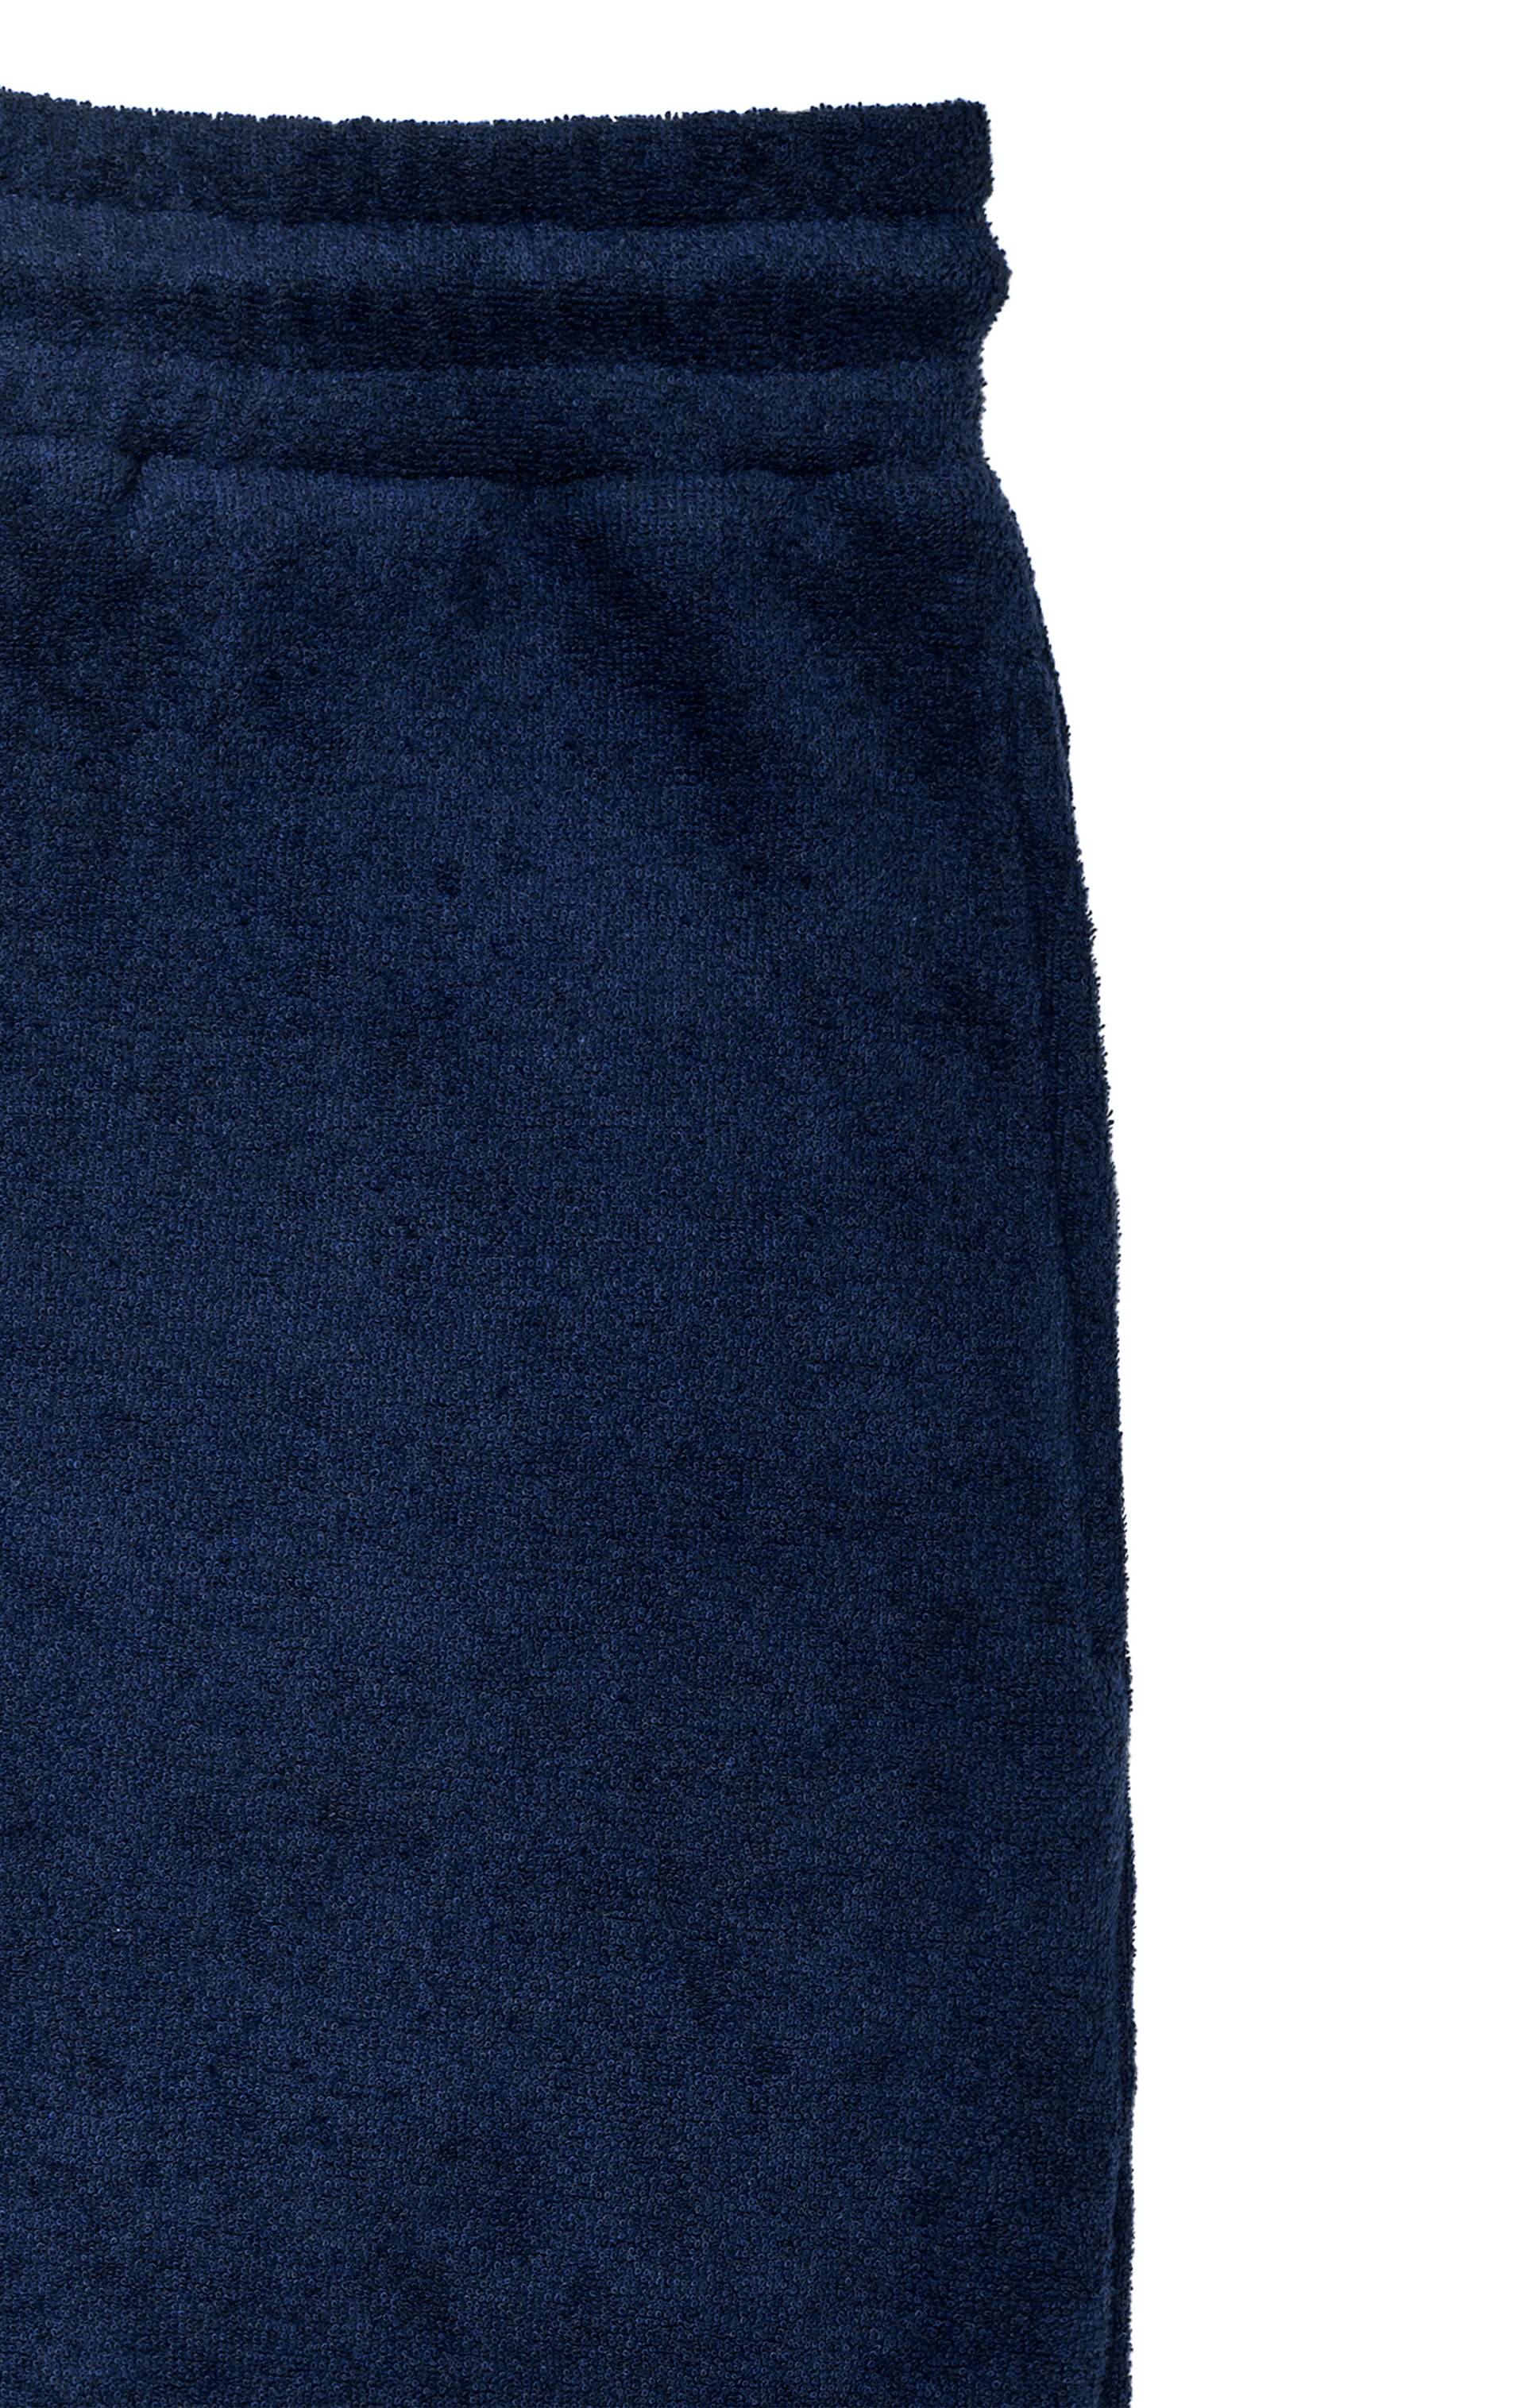 Onepiece Towel Club Shorts Navy - 2